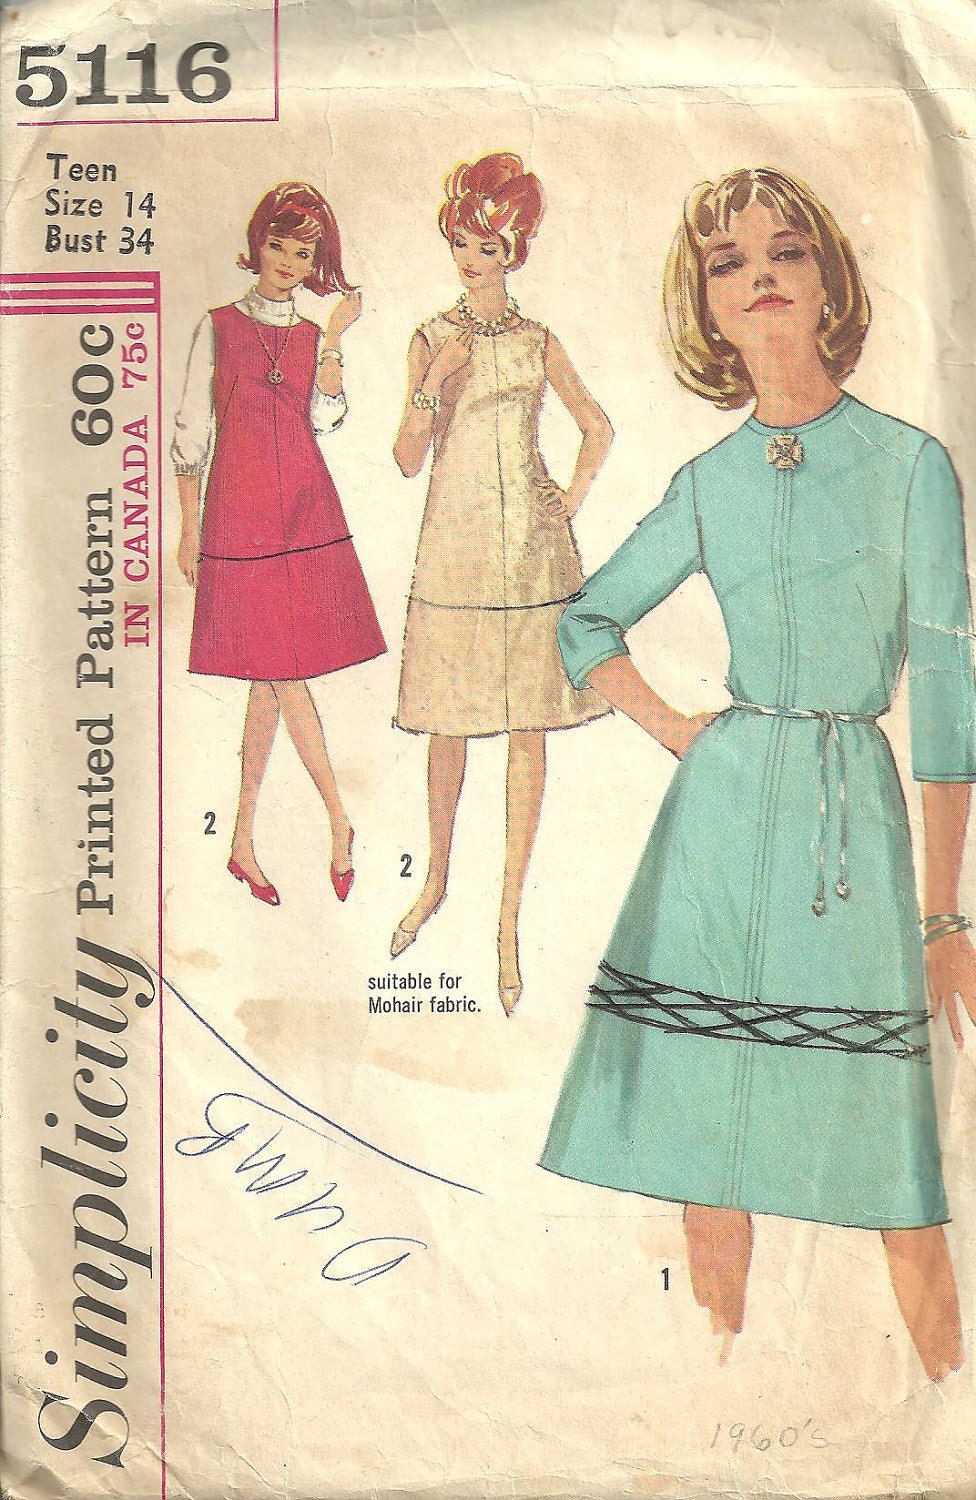 Vintage Simplicity A line Dress Pattern 5116 year 1960 size 14